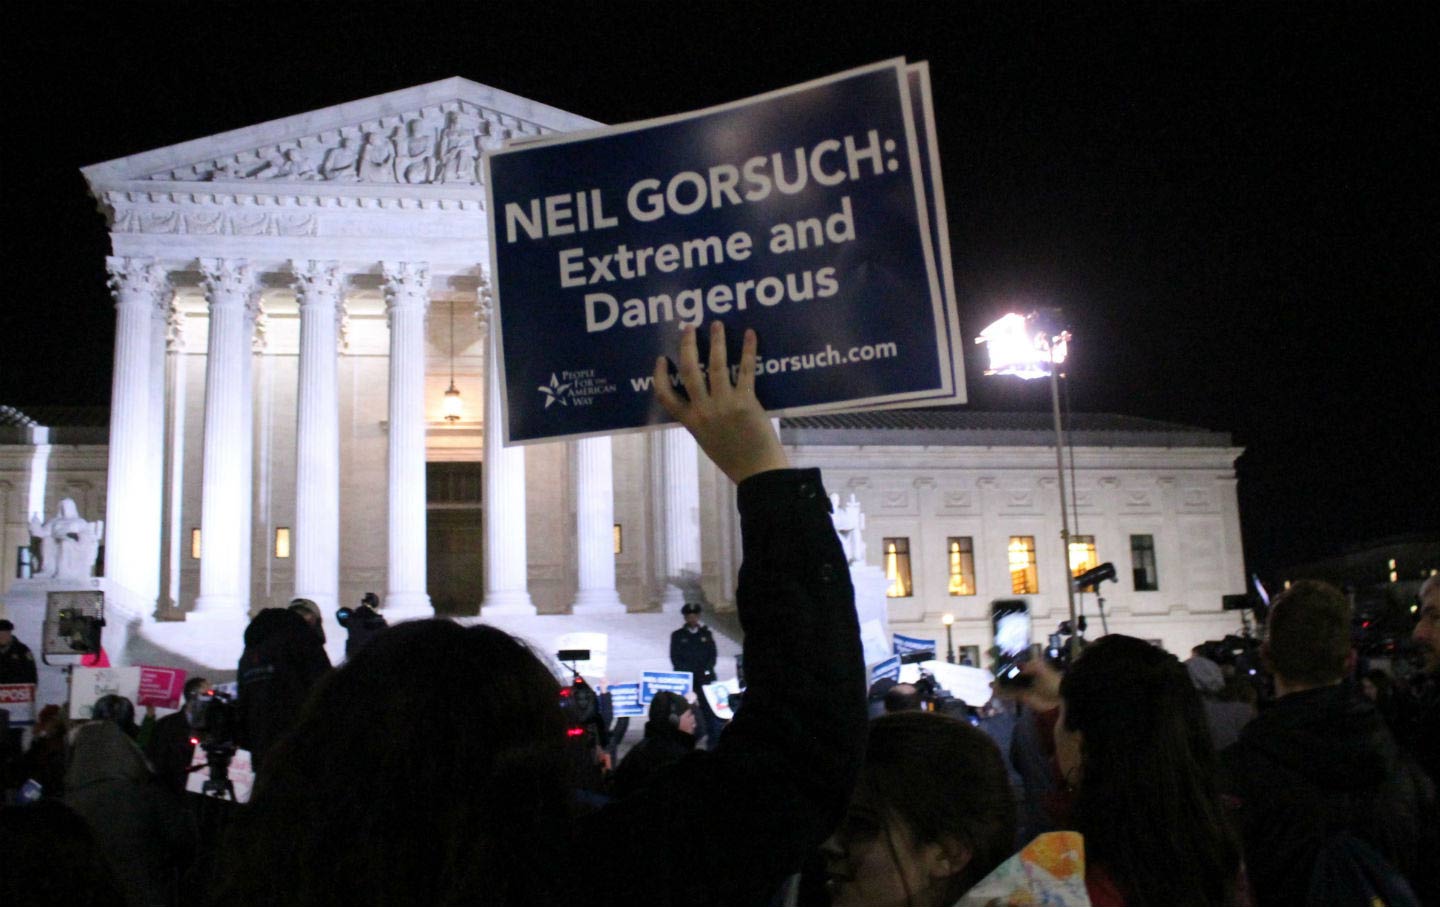 Neil Gorsuch Supreme Court Nomination Protest